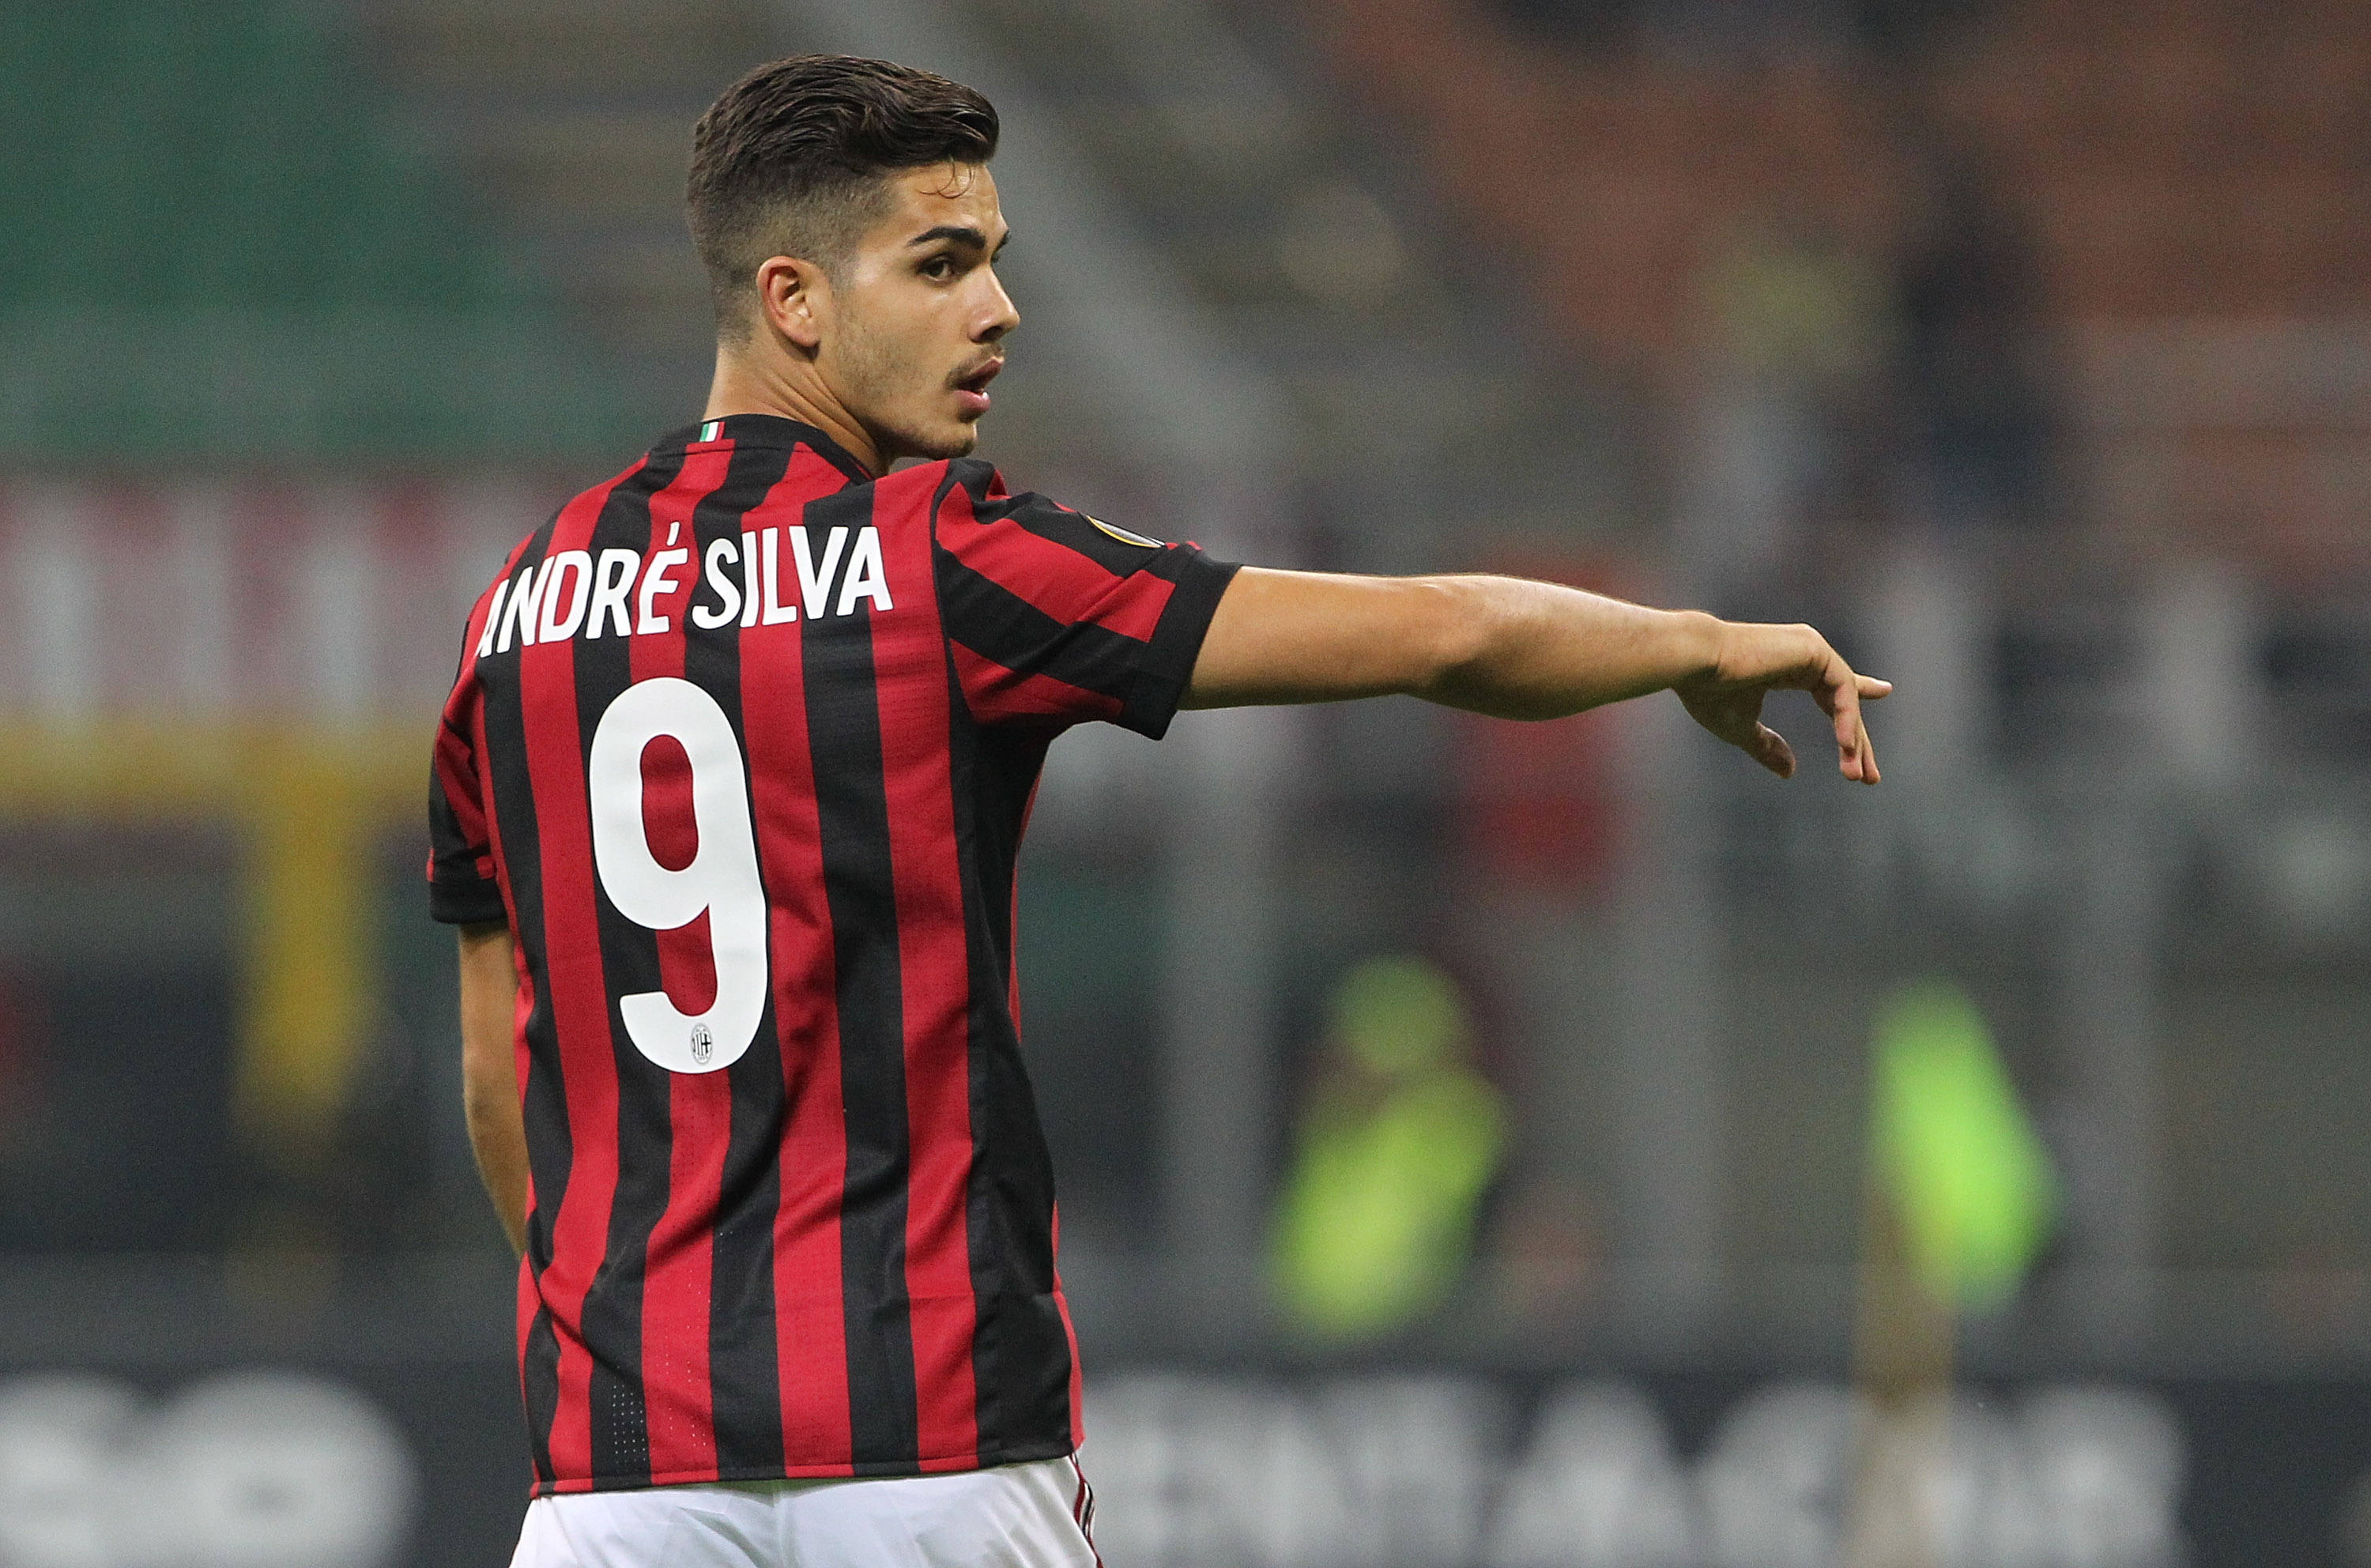 MilanNews.it – Silva to start the derby, Kalinic…